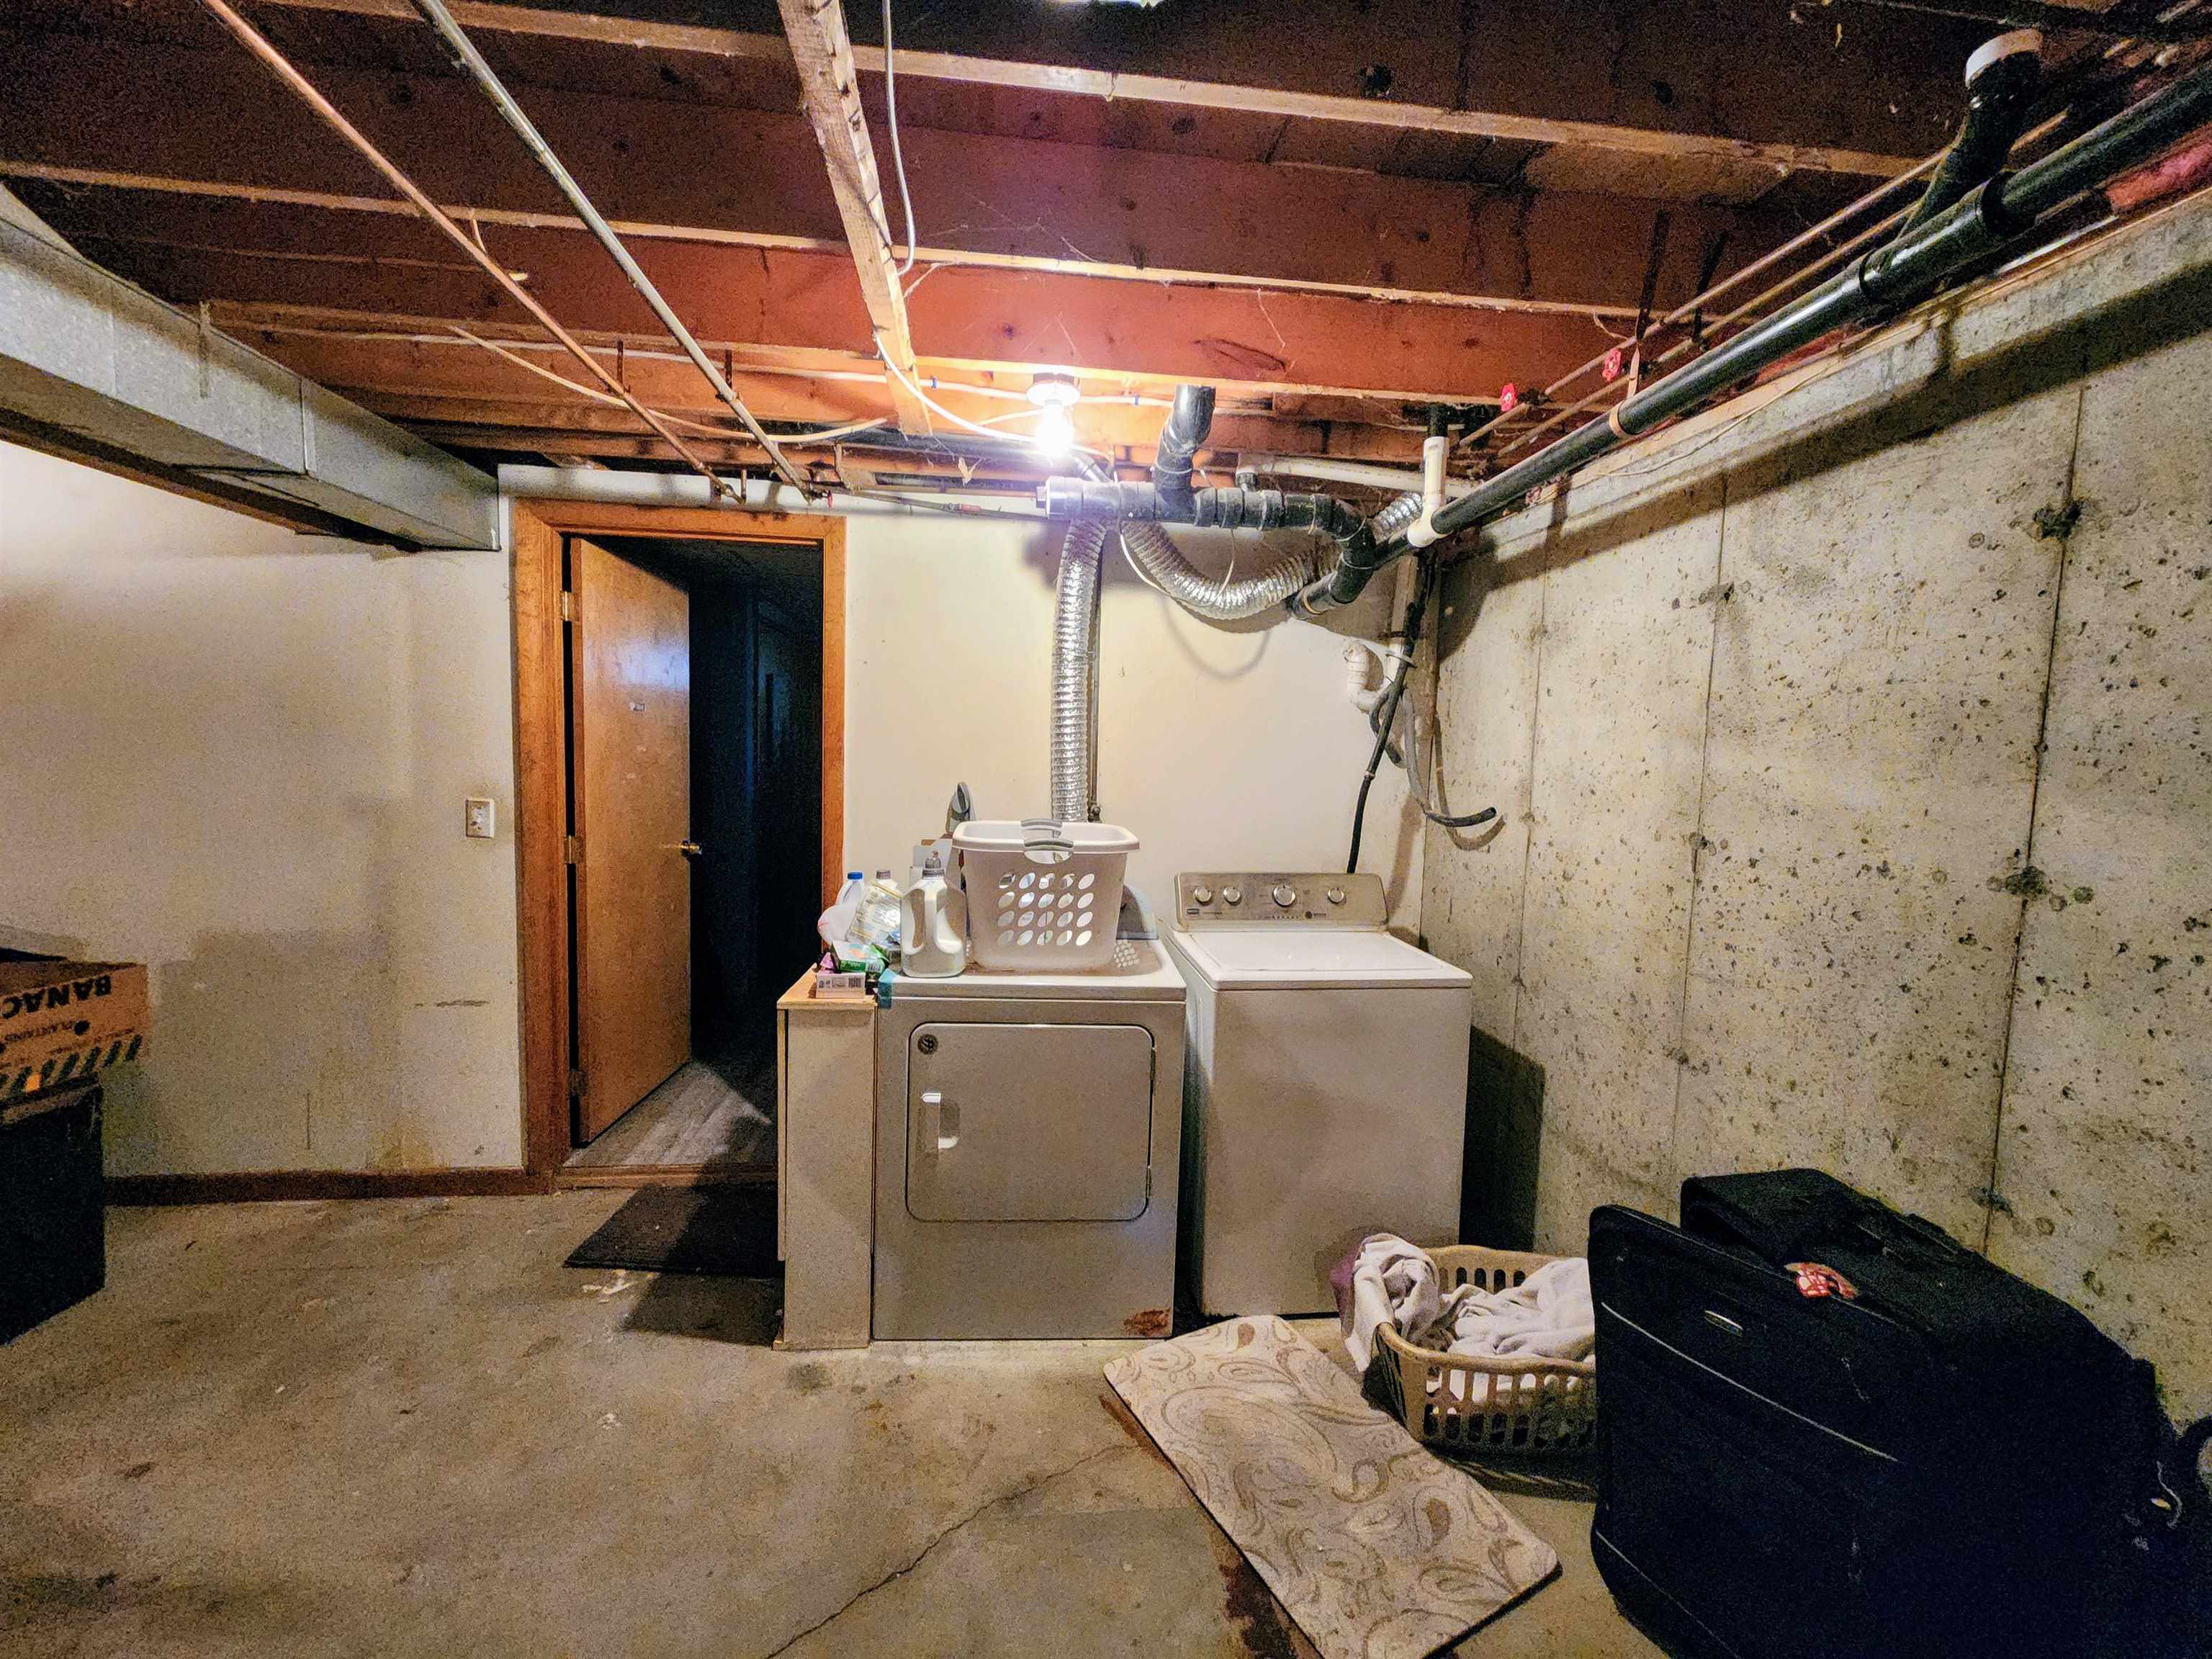 laundry area in basement